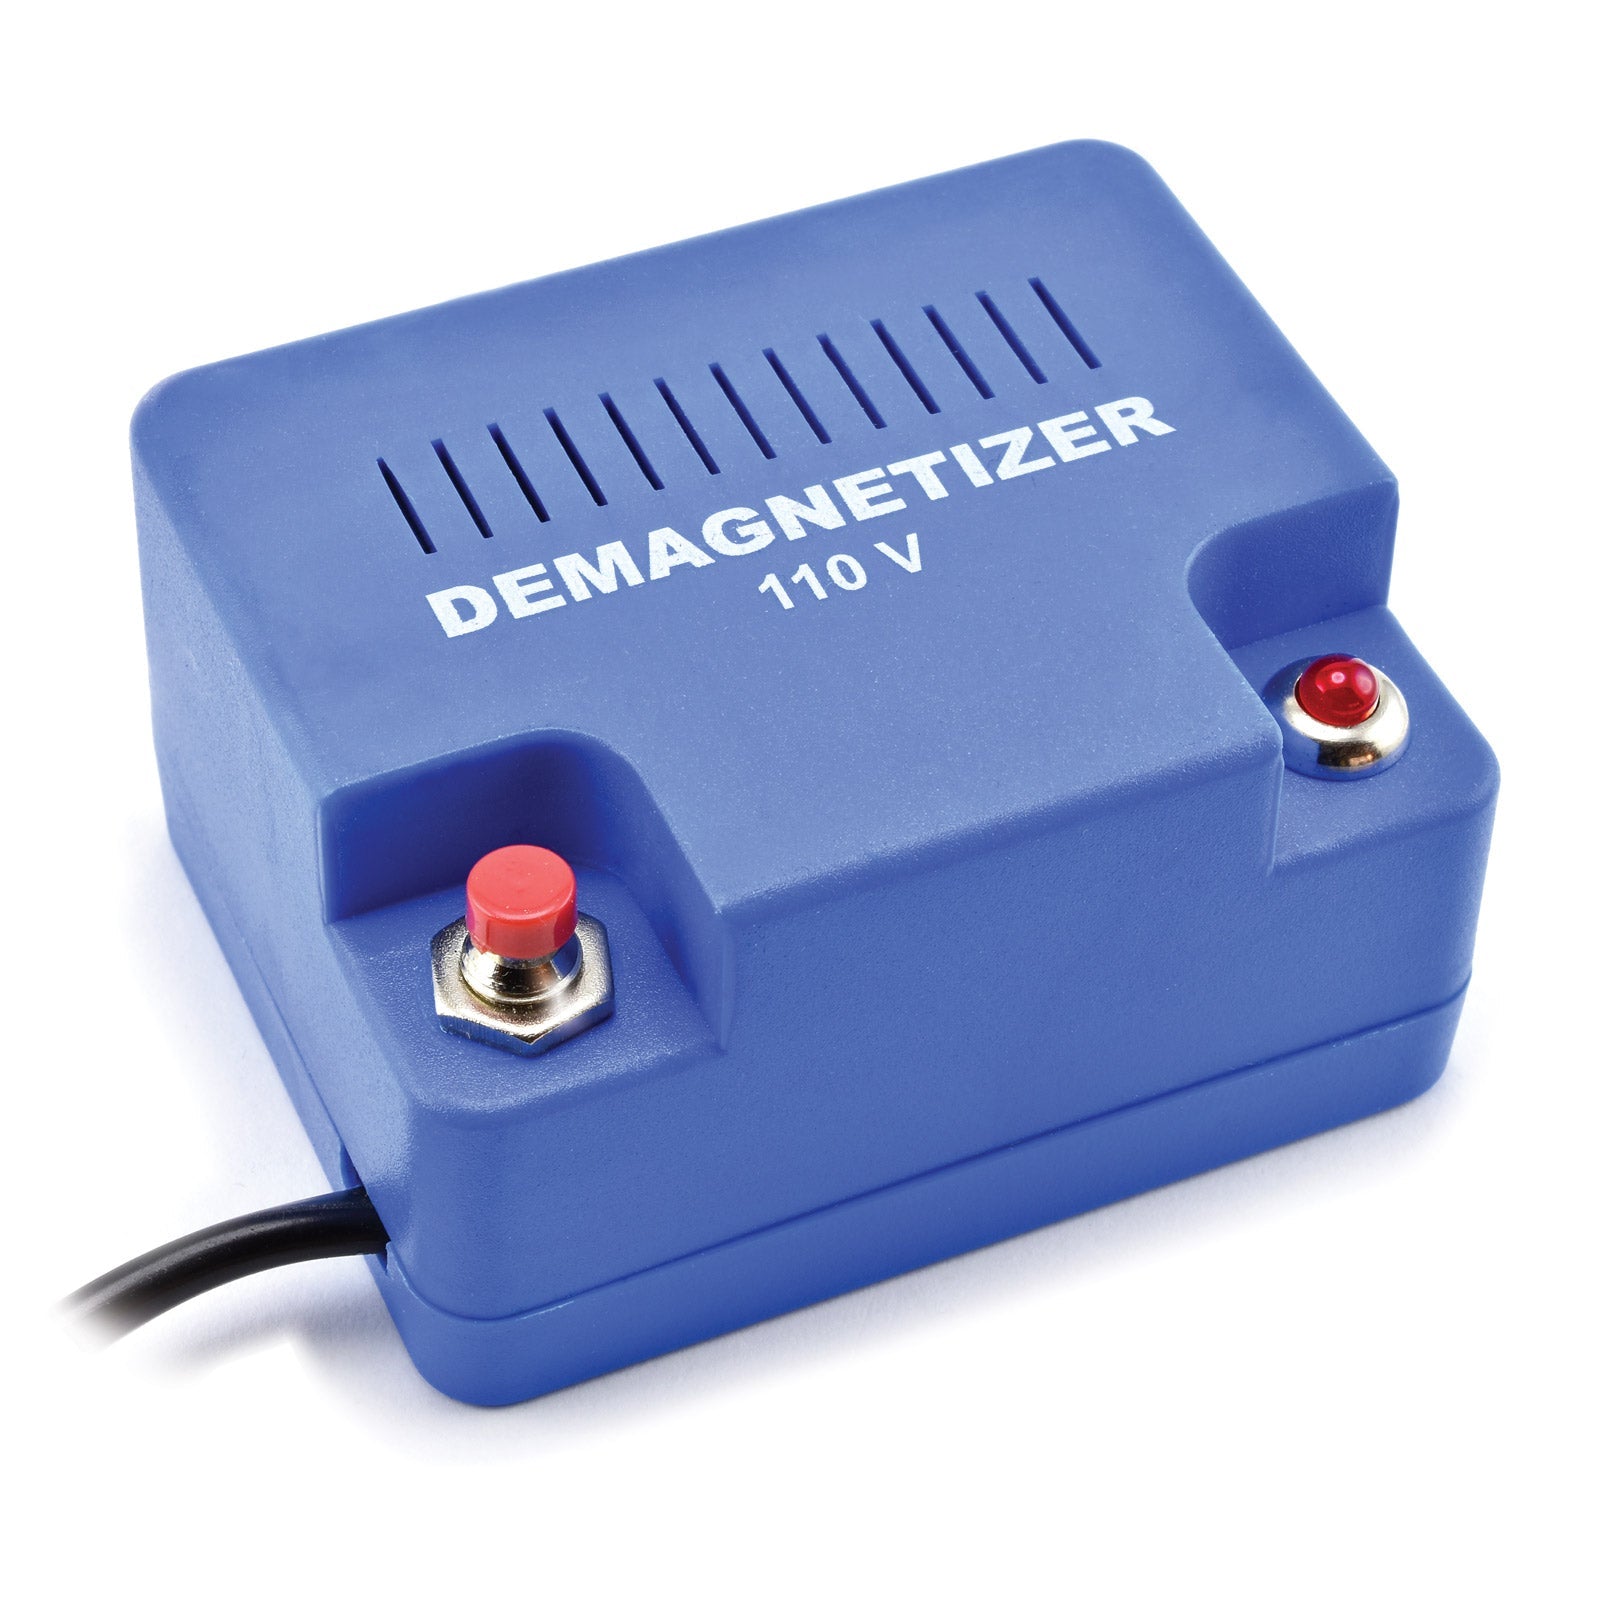 Electronic Demagnetizer, 110VAC